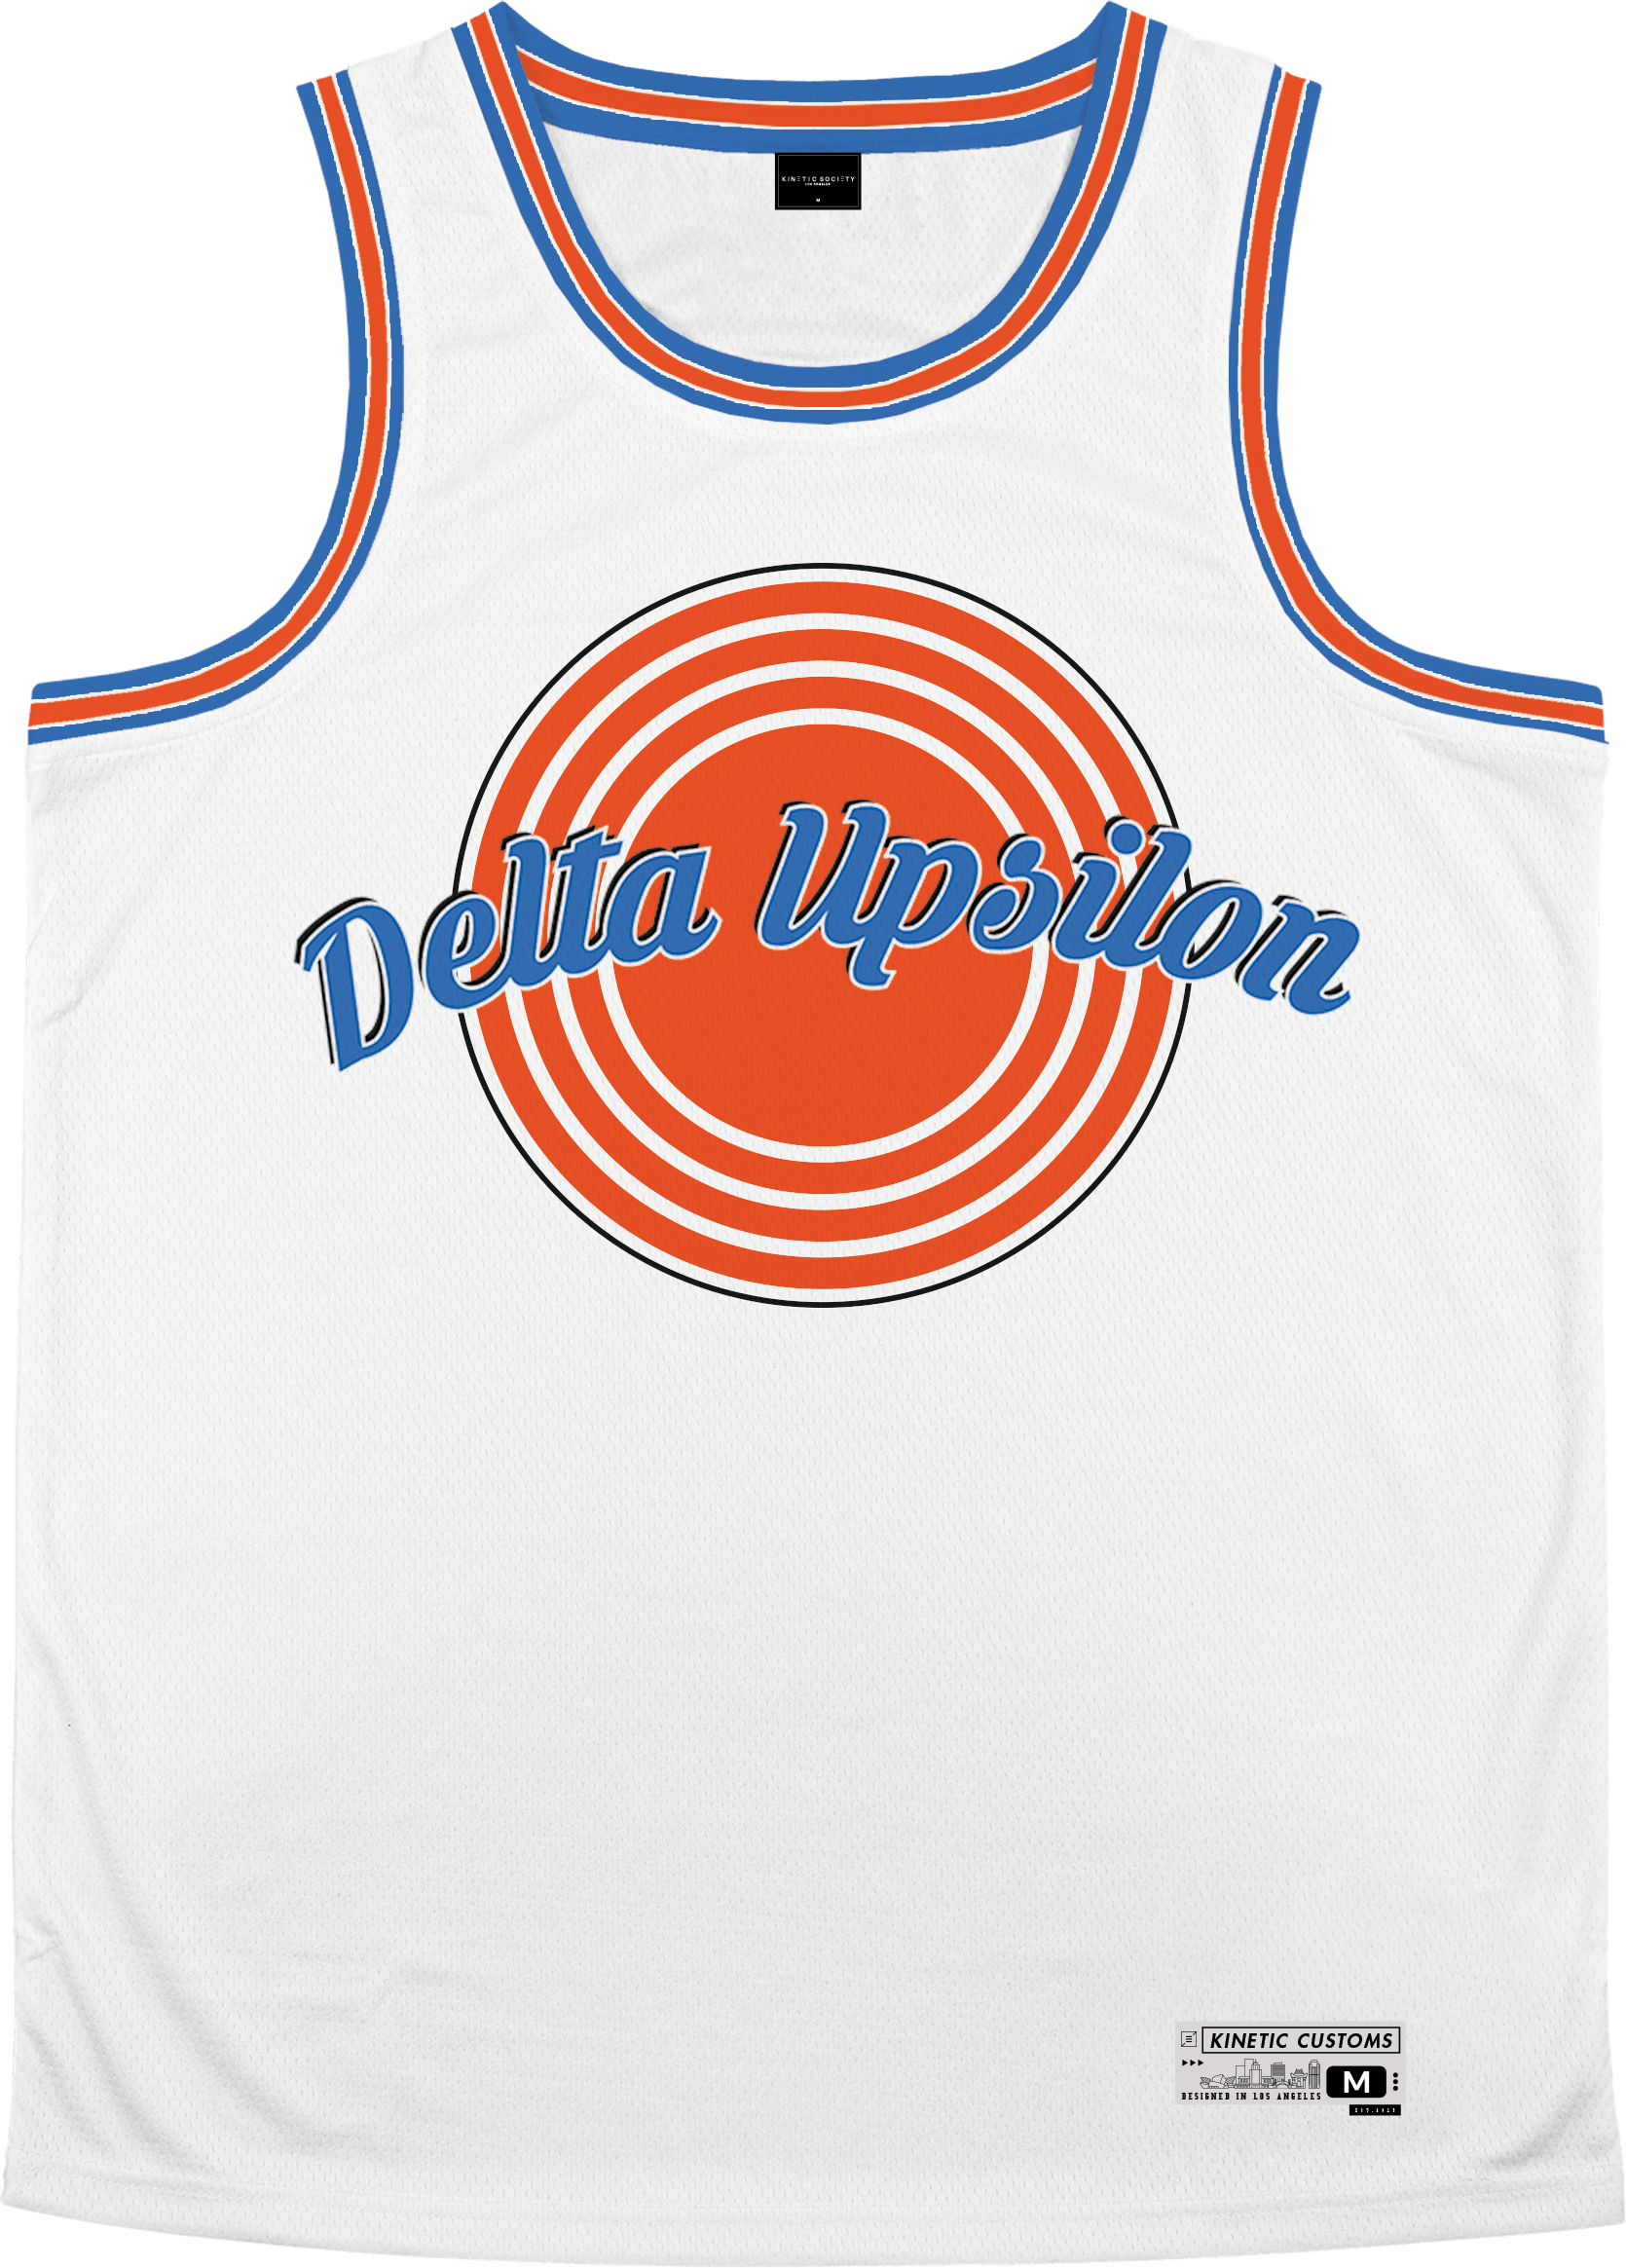 Delta Upsilon - Vintage Basketball Jersey Premium Basketball Kinetic Society LLC 